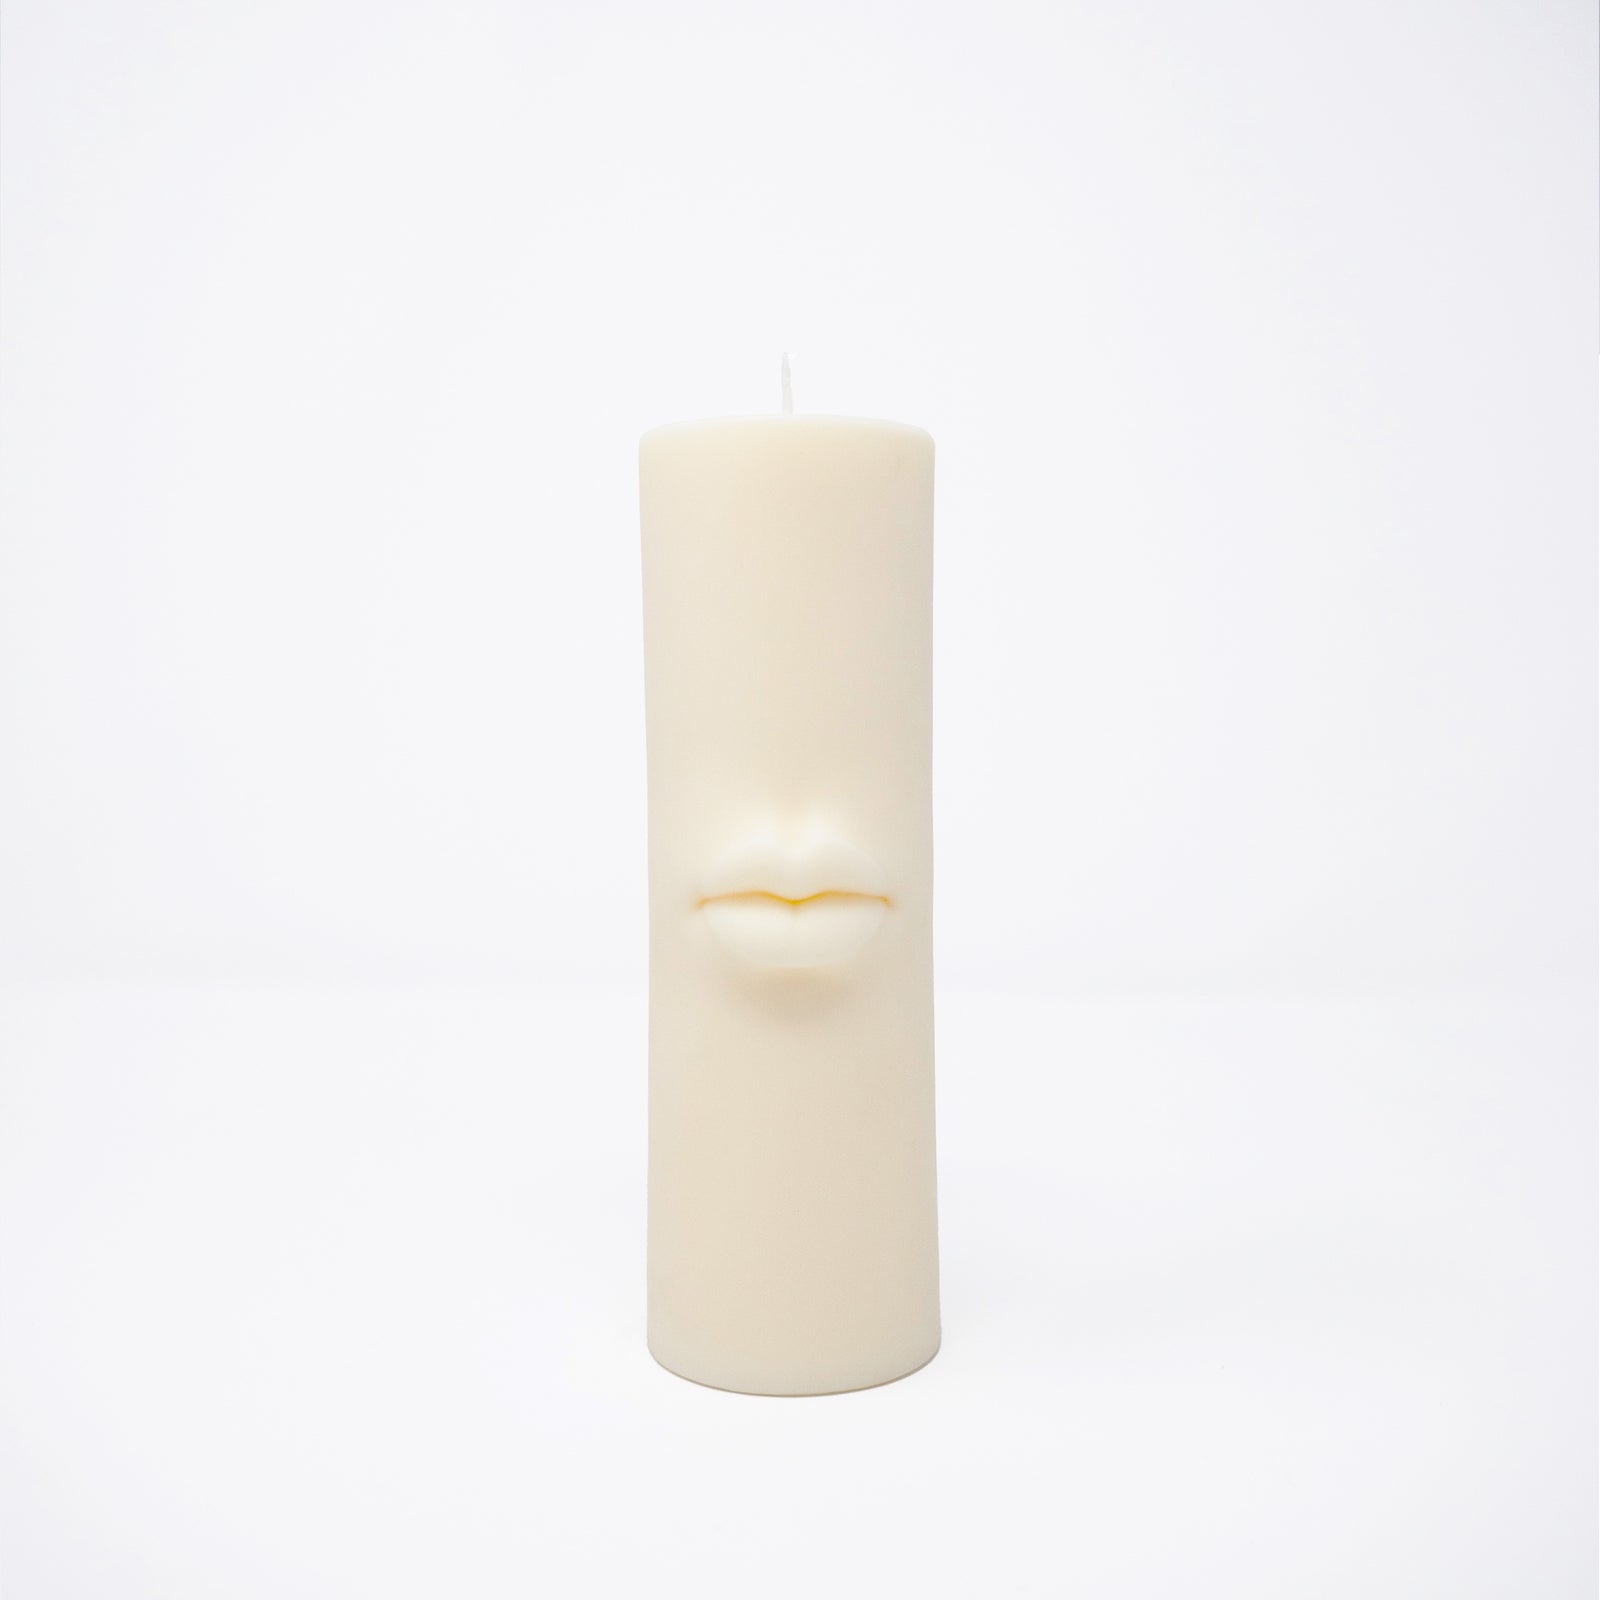 Lips Form Candle, white - Secret Location